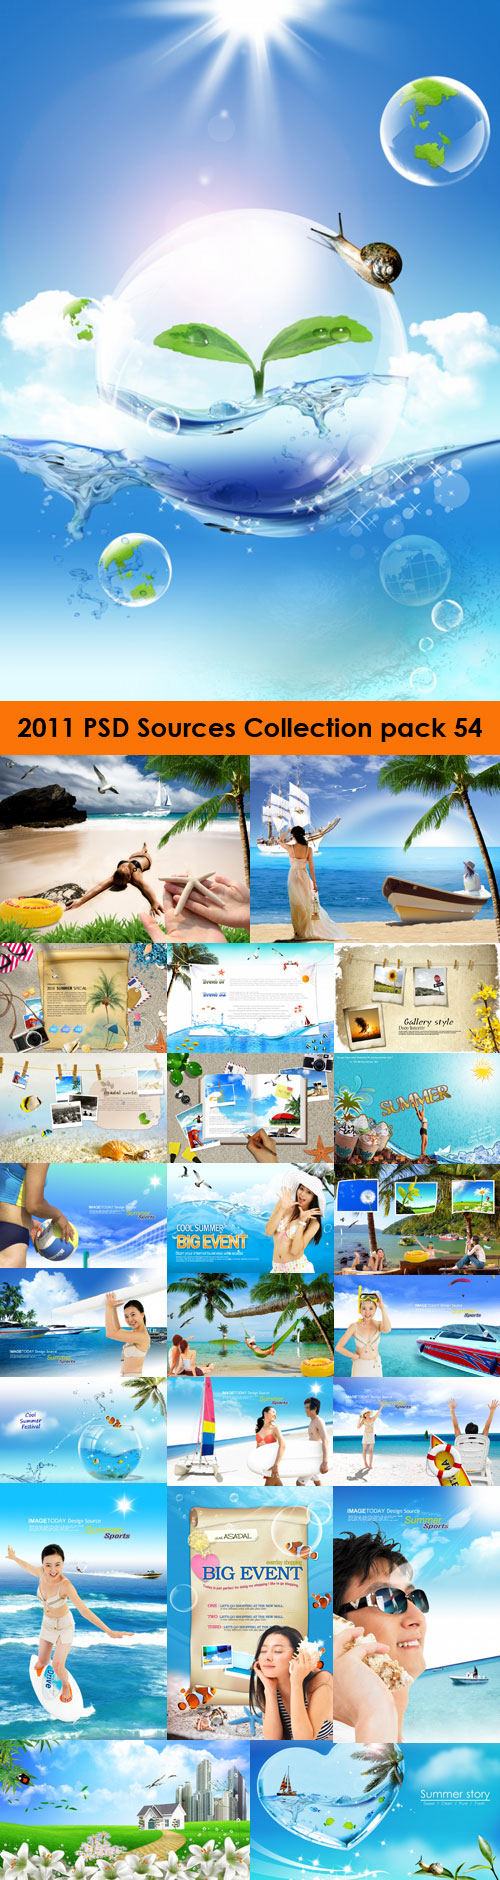 Descarga Coleccion - PSD Sources - Pack 54 ( 2011) Gratis